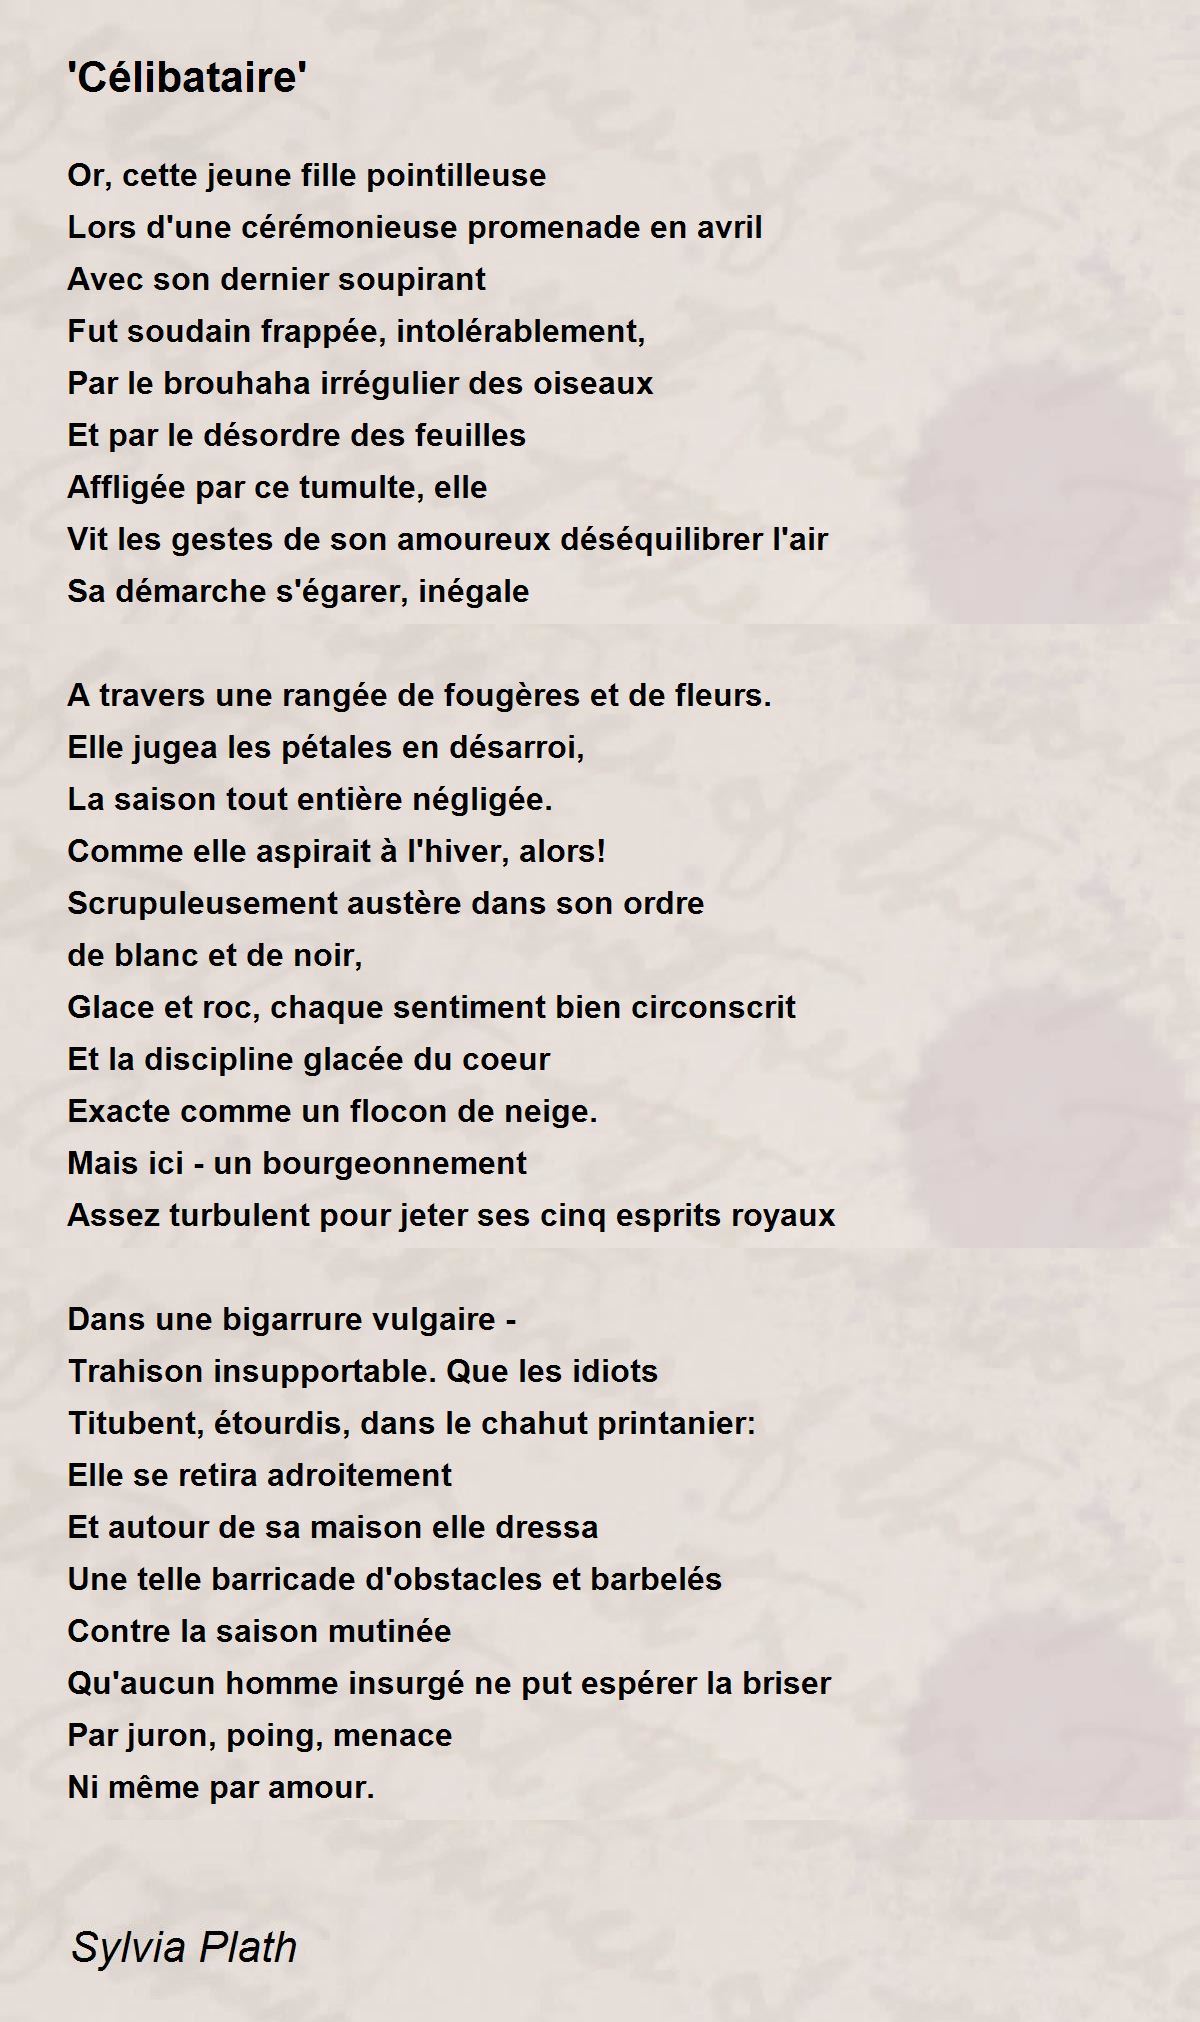 'Célibataire' - 'Célibataire' Poem by Sylvia Plath